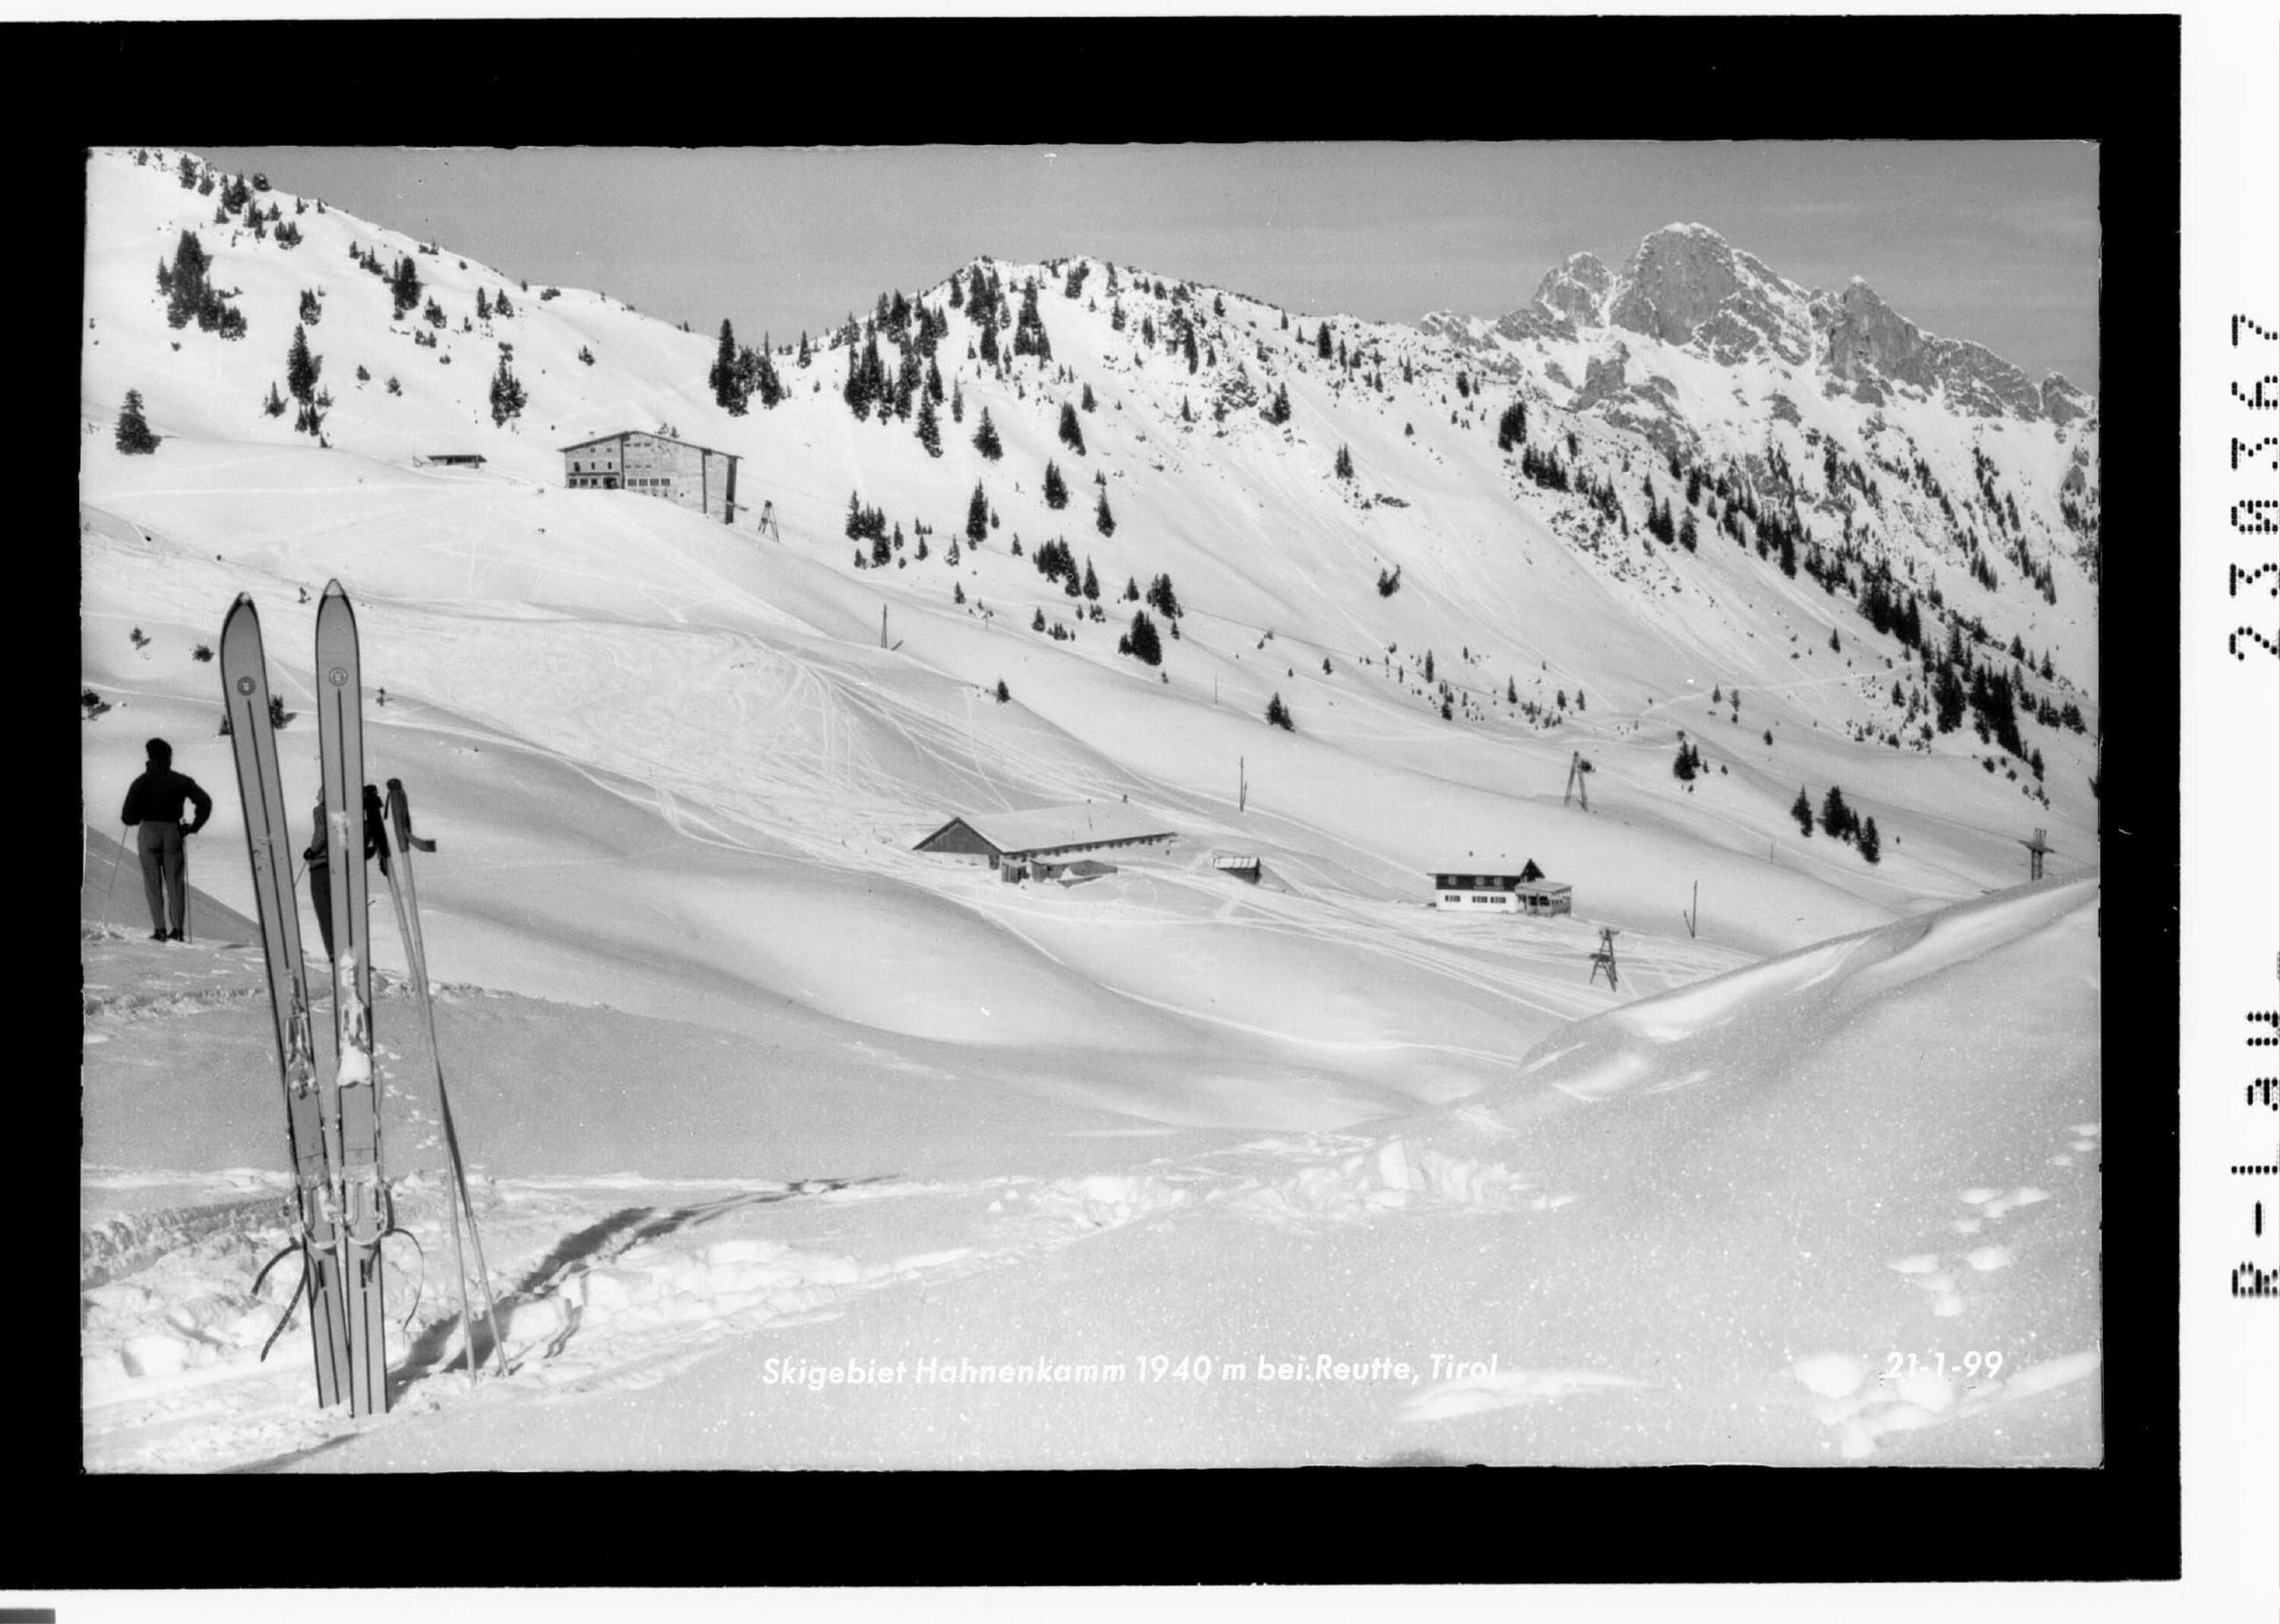 Skigebiet am Hahnenkamm 1940 m bei Reutte / Tirol></div>


    <hr>
    <div class=